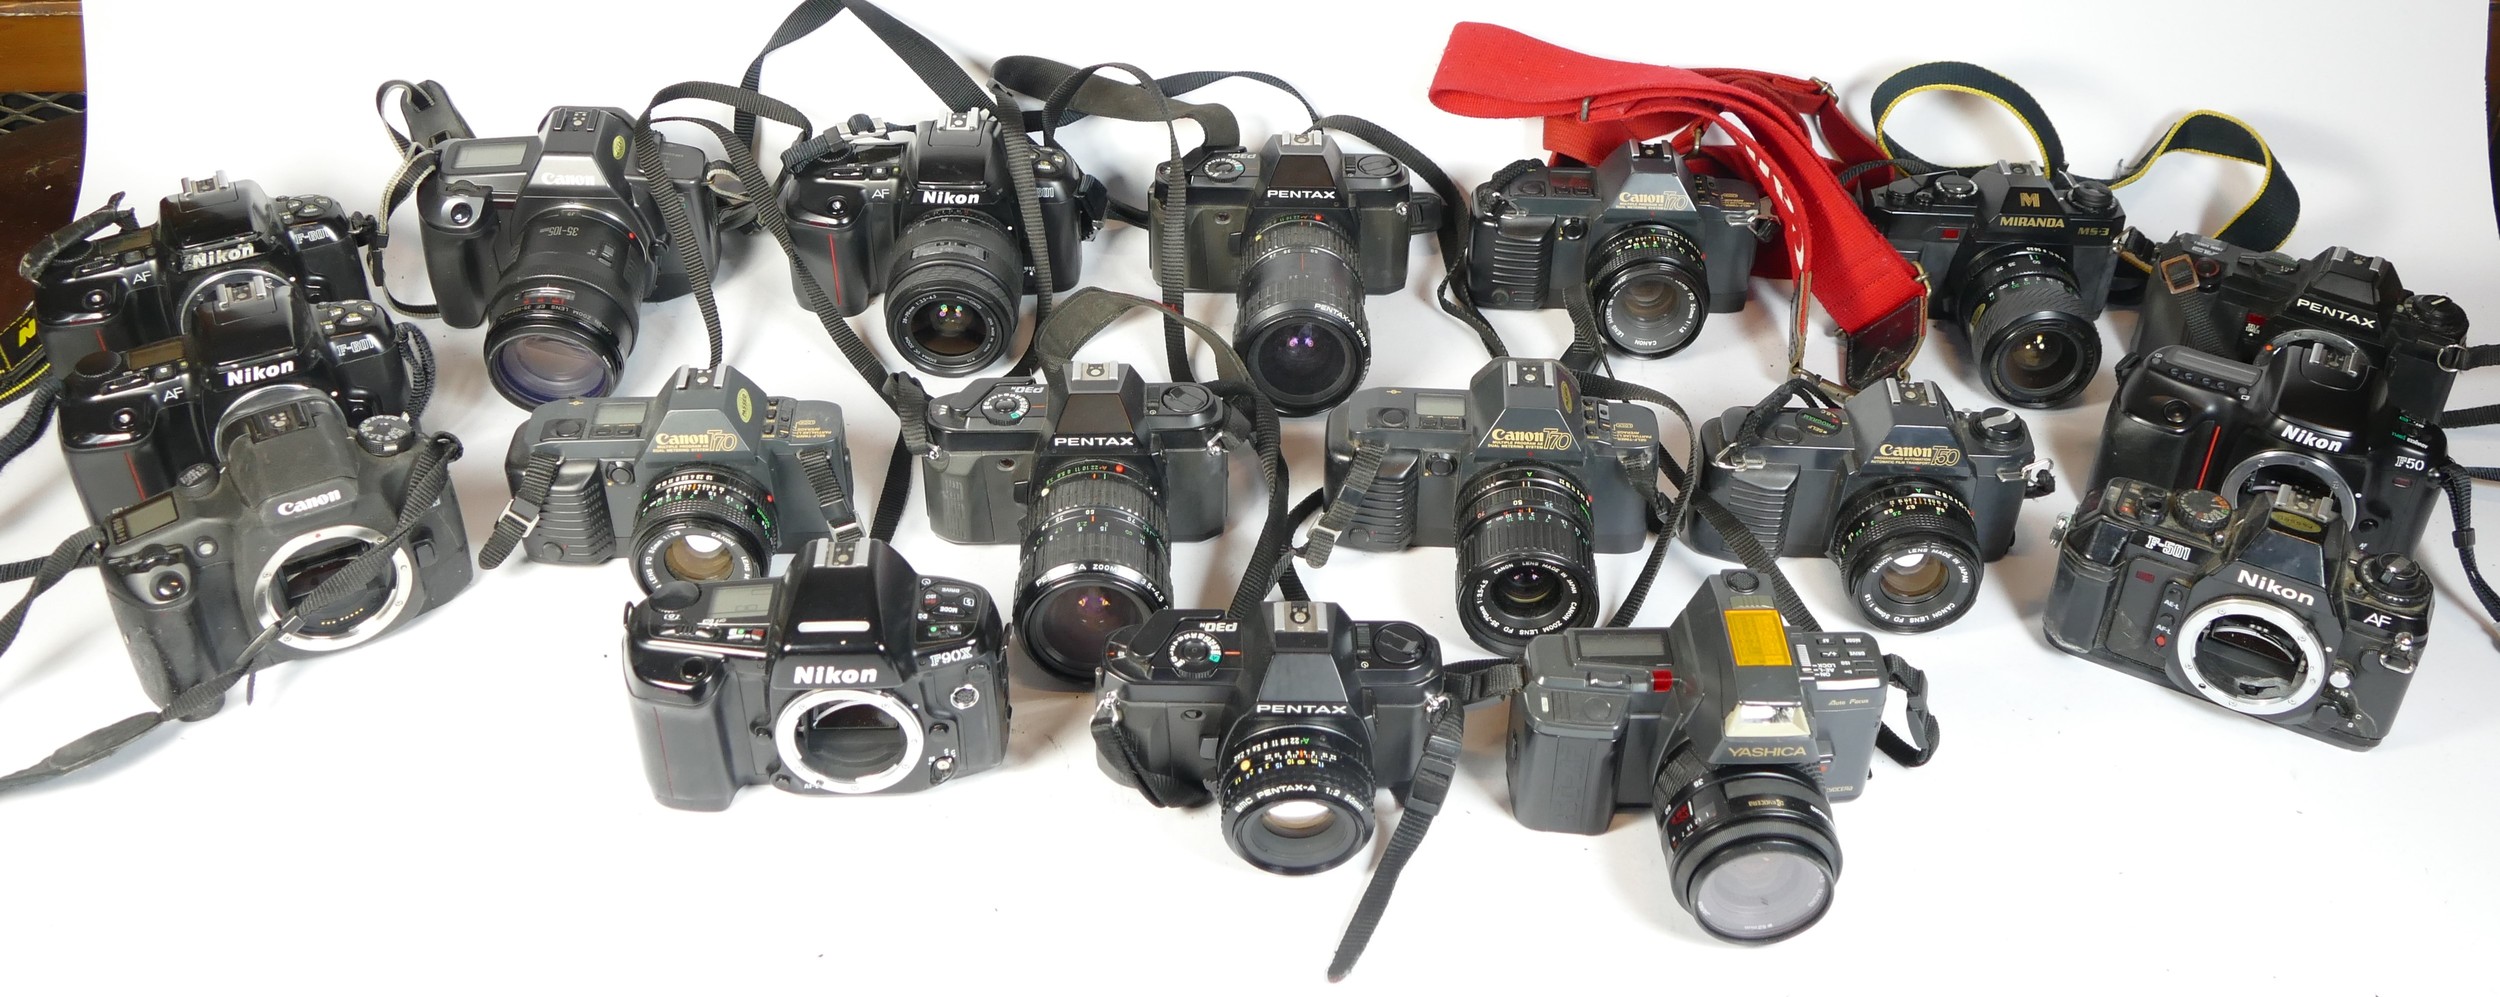 Twenty seven SLR vintage film cameras to include a Pentax P30, a Nikon F301, a Canon T70 and a Nikon